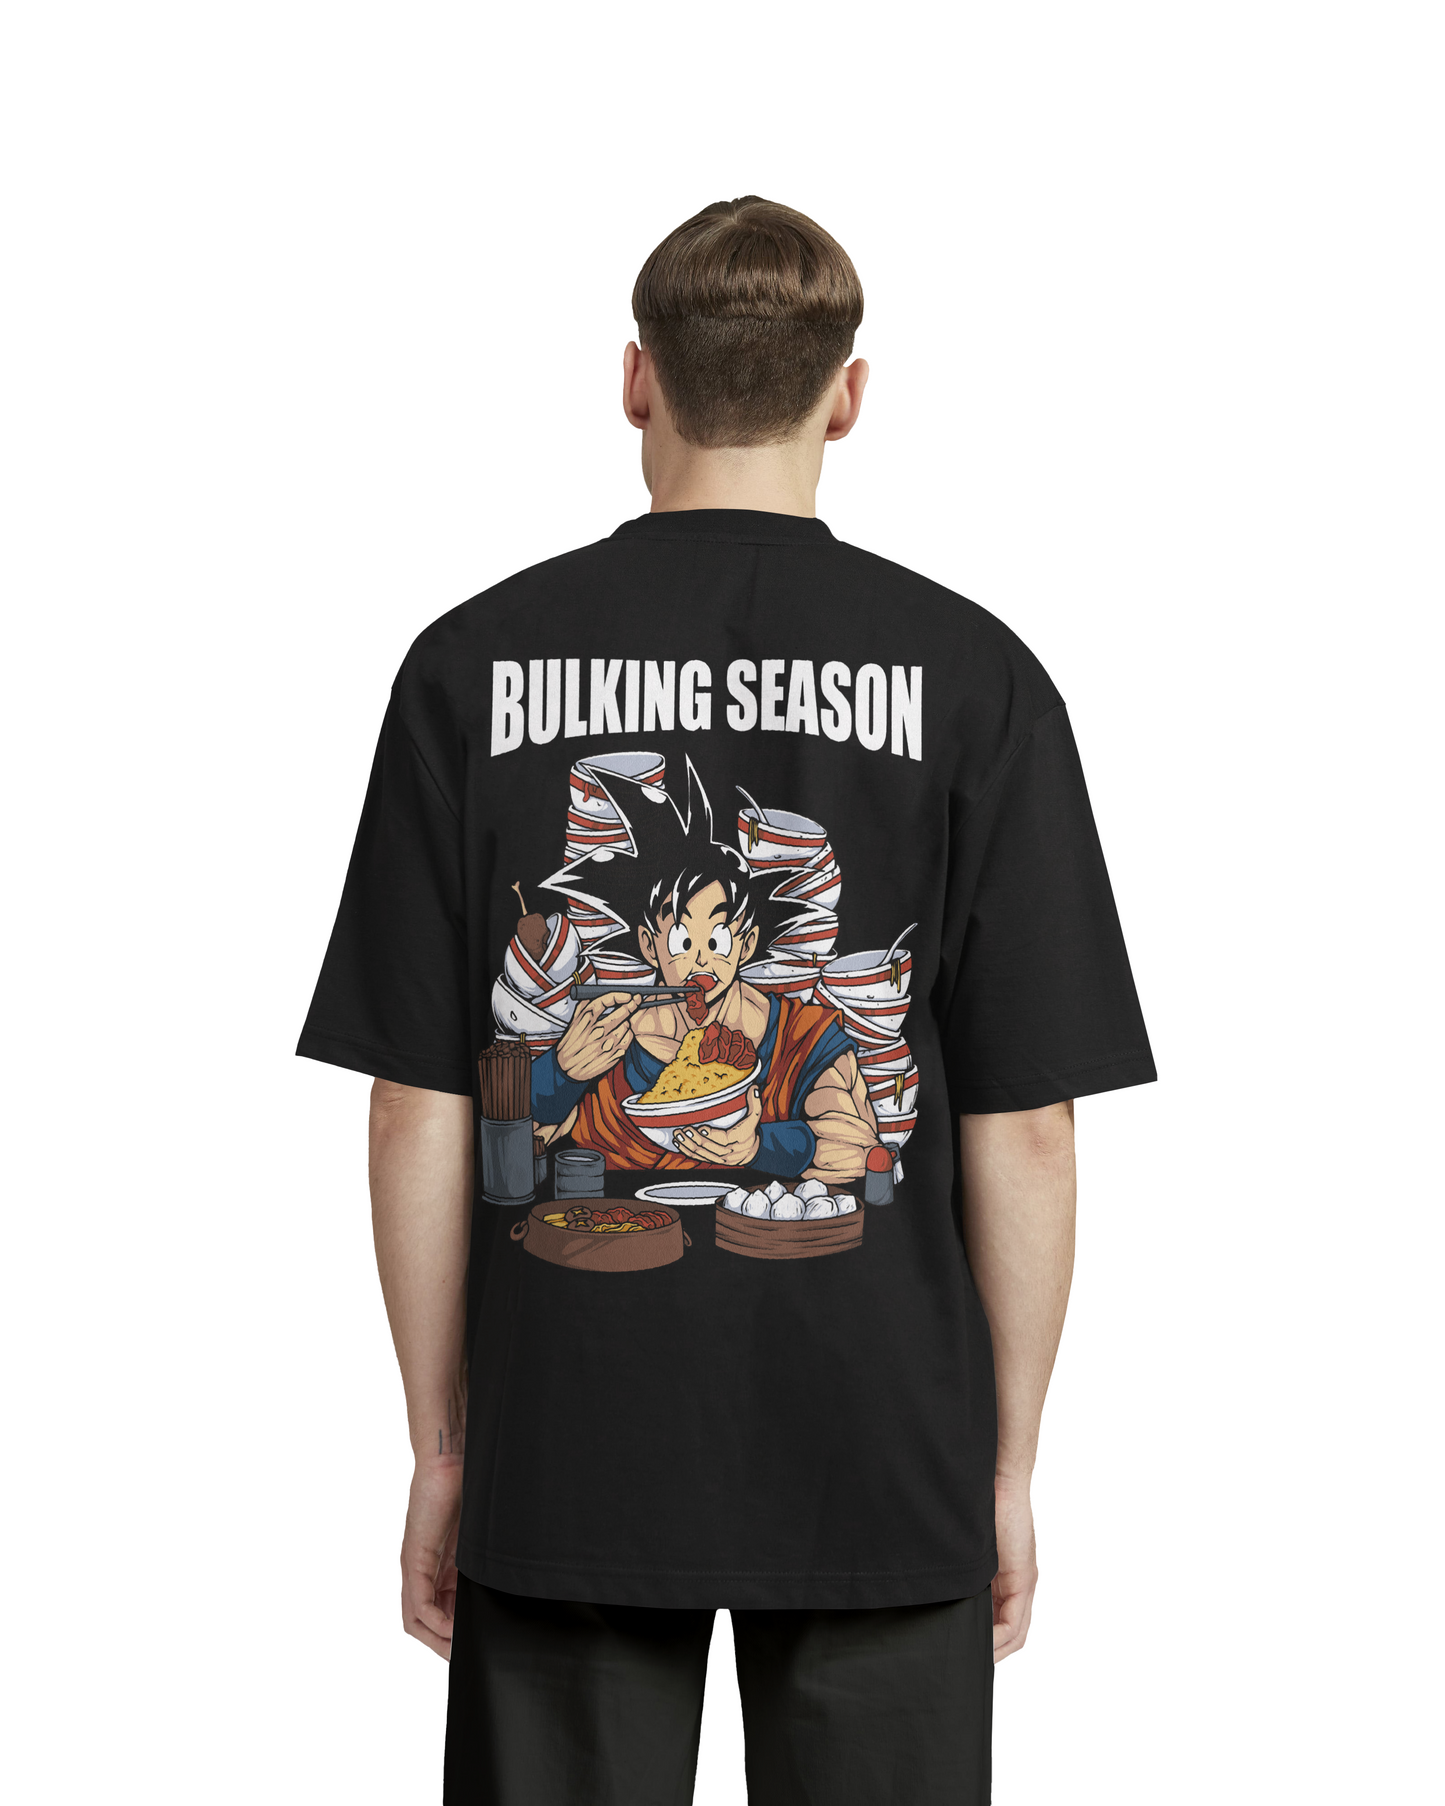 "SON GOKU x BULKING SEASON" - Oversized Shirt